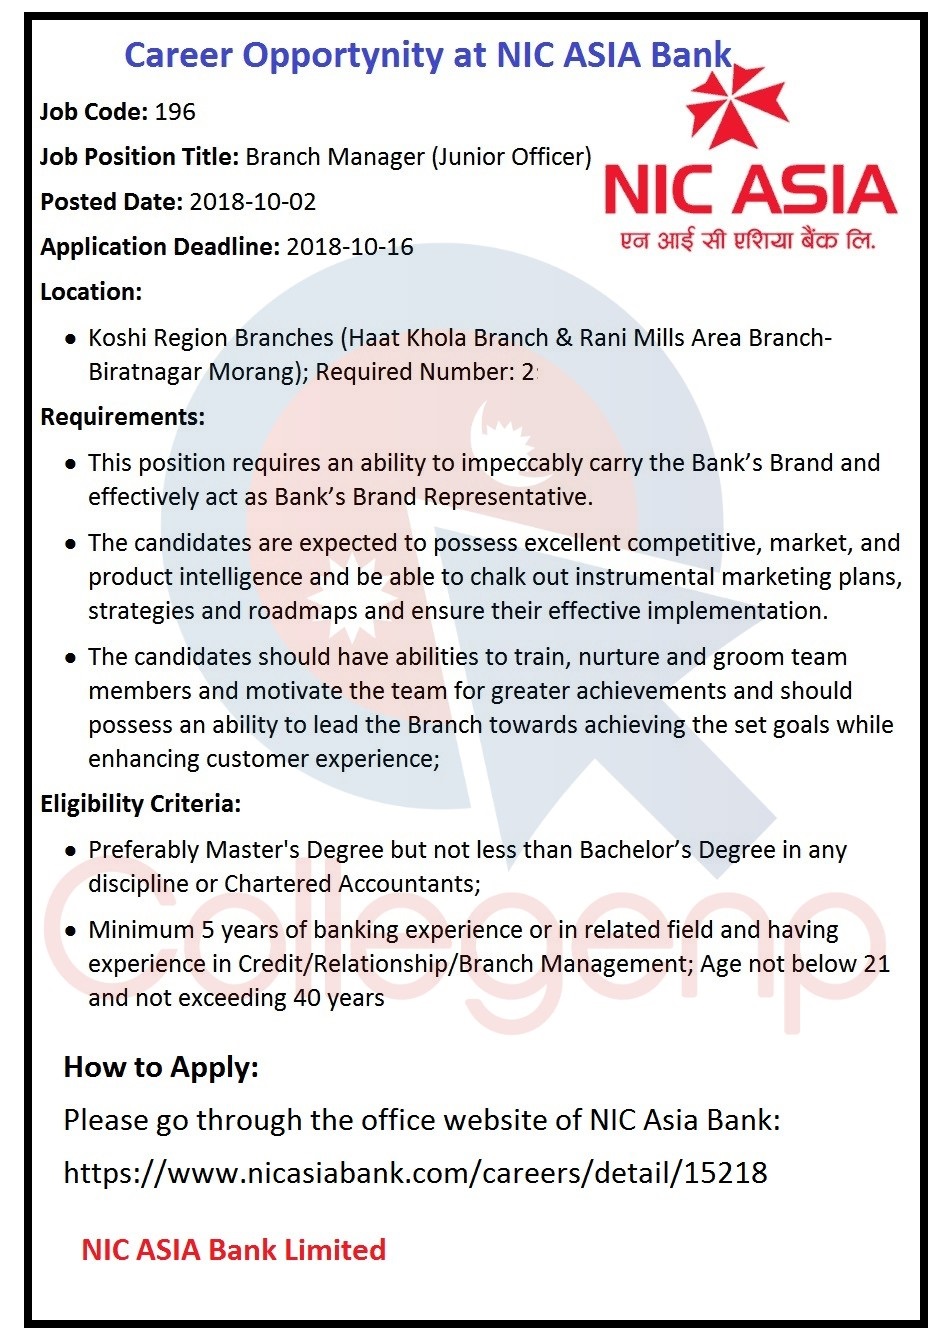 NIC ASIA Bank job vacancy Announcement